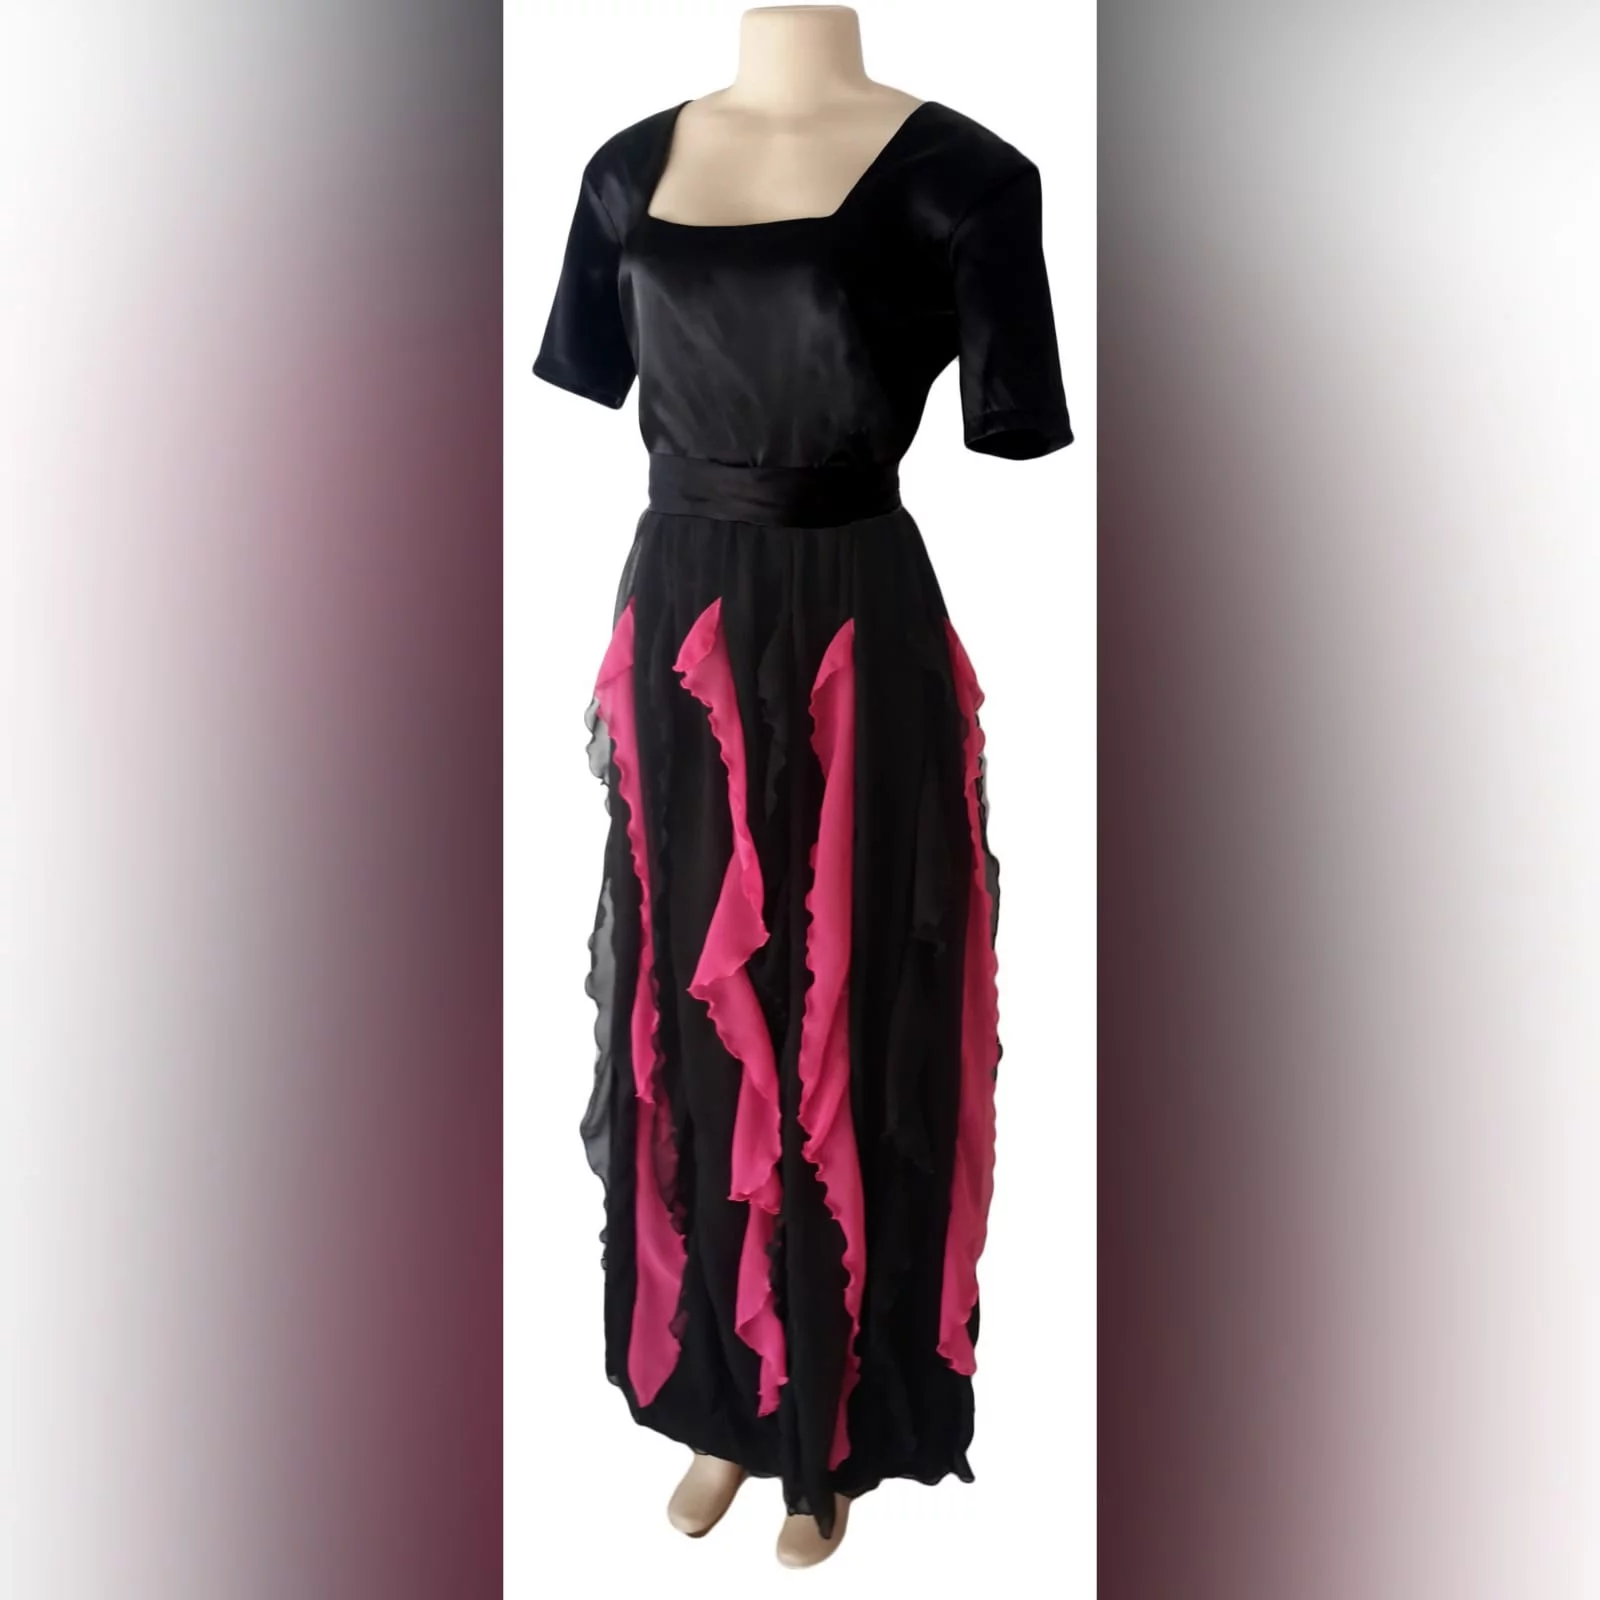 Black and pink evening dress 2 black & pink evening dress with square neckline short sleeves & vertical pink and black frills